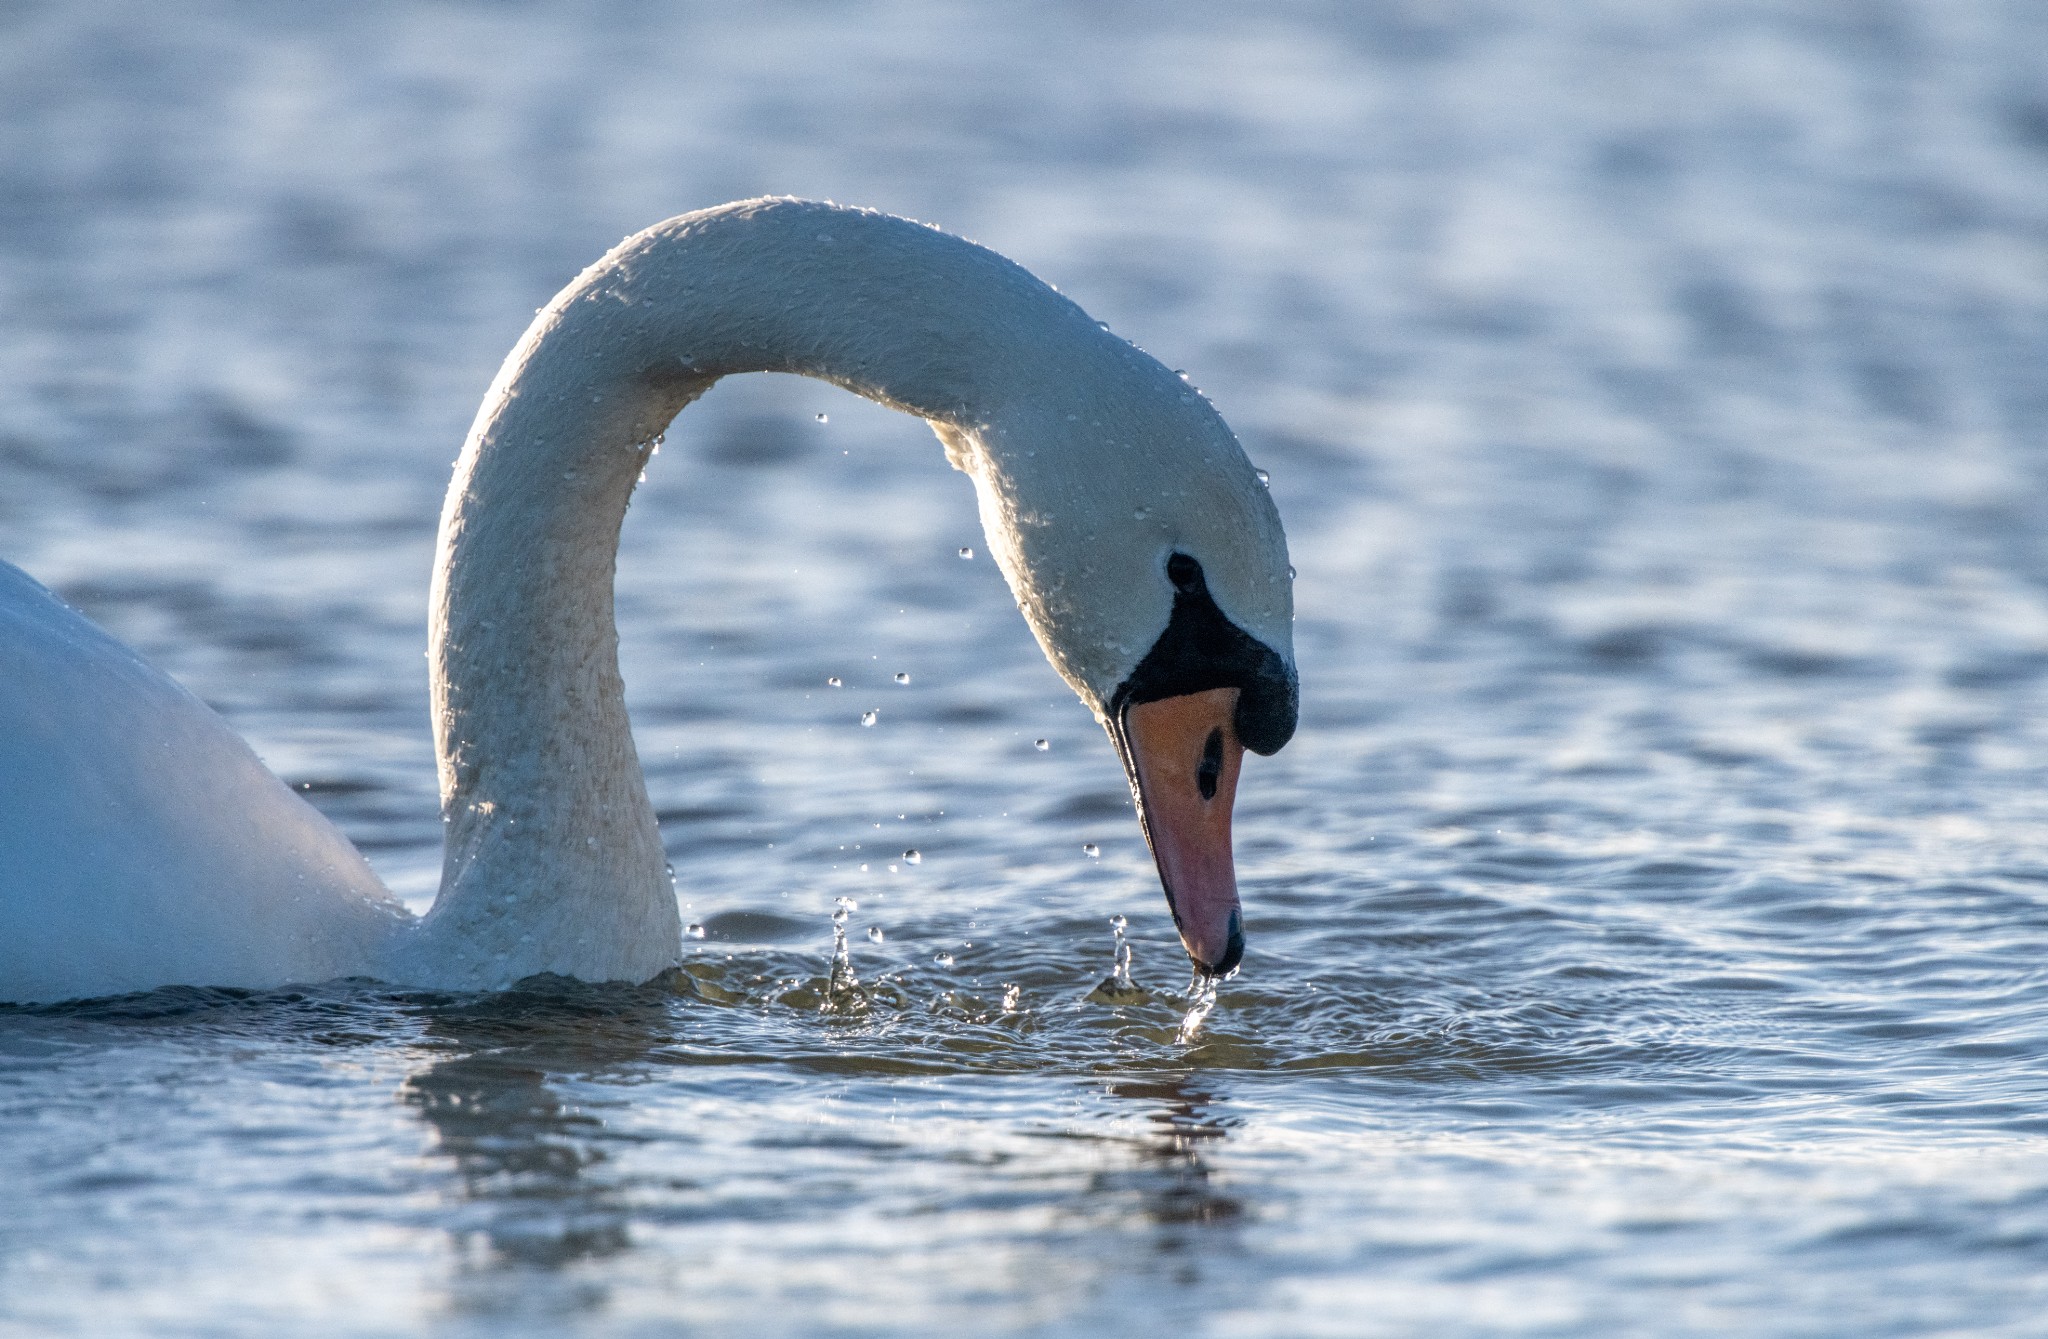 Mute swan in Orkney - image by Raymond Besant